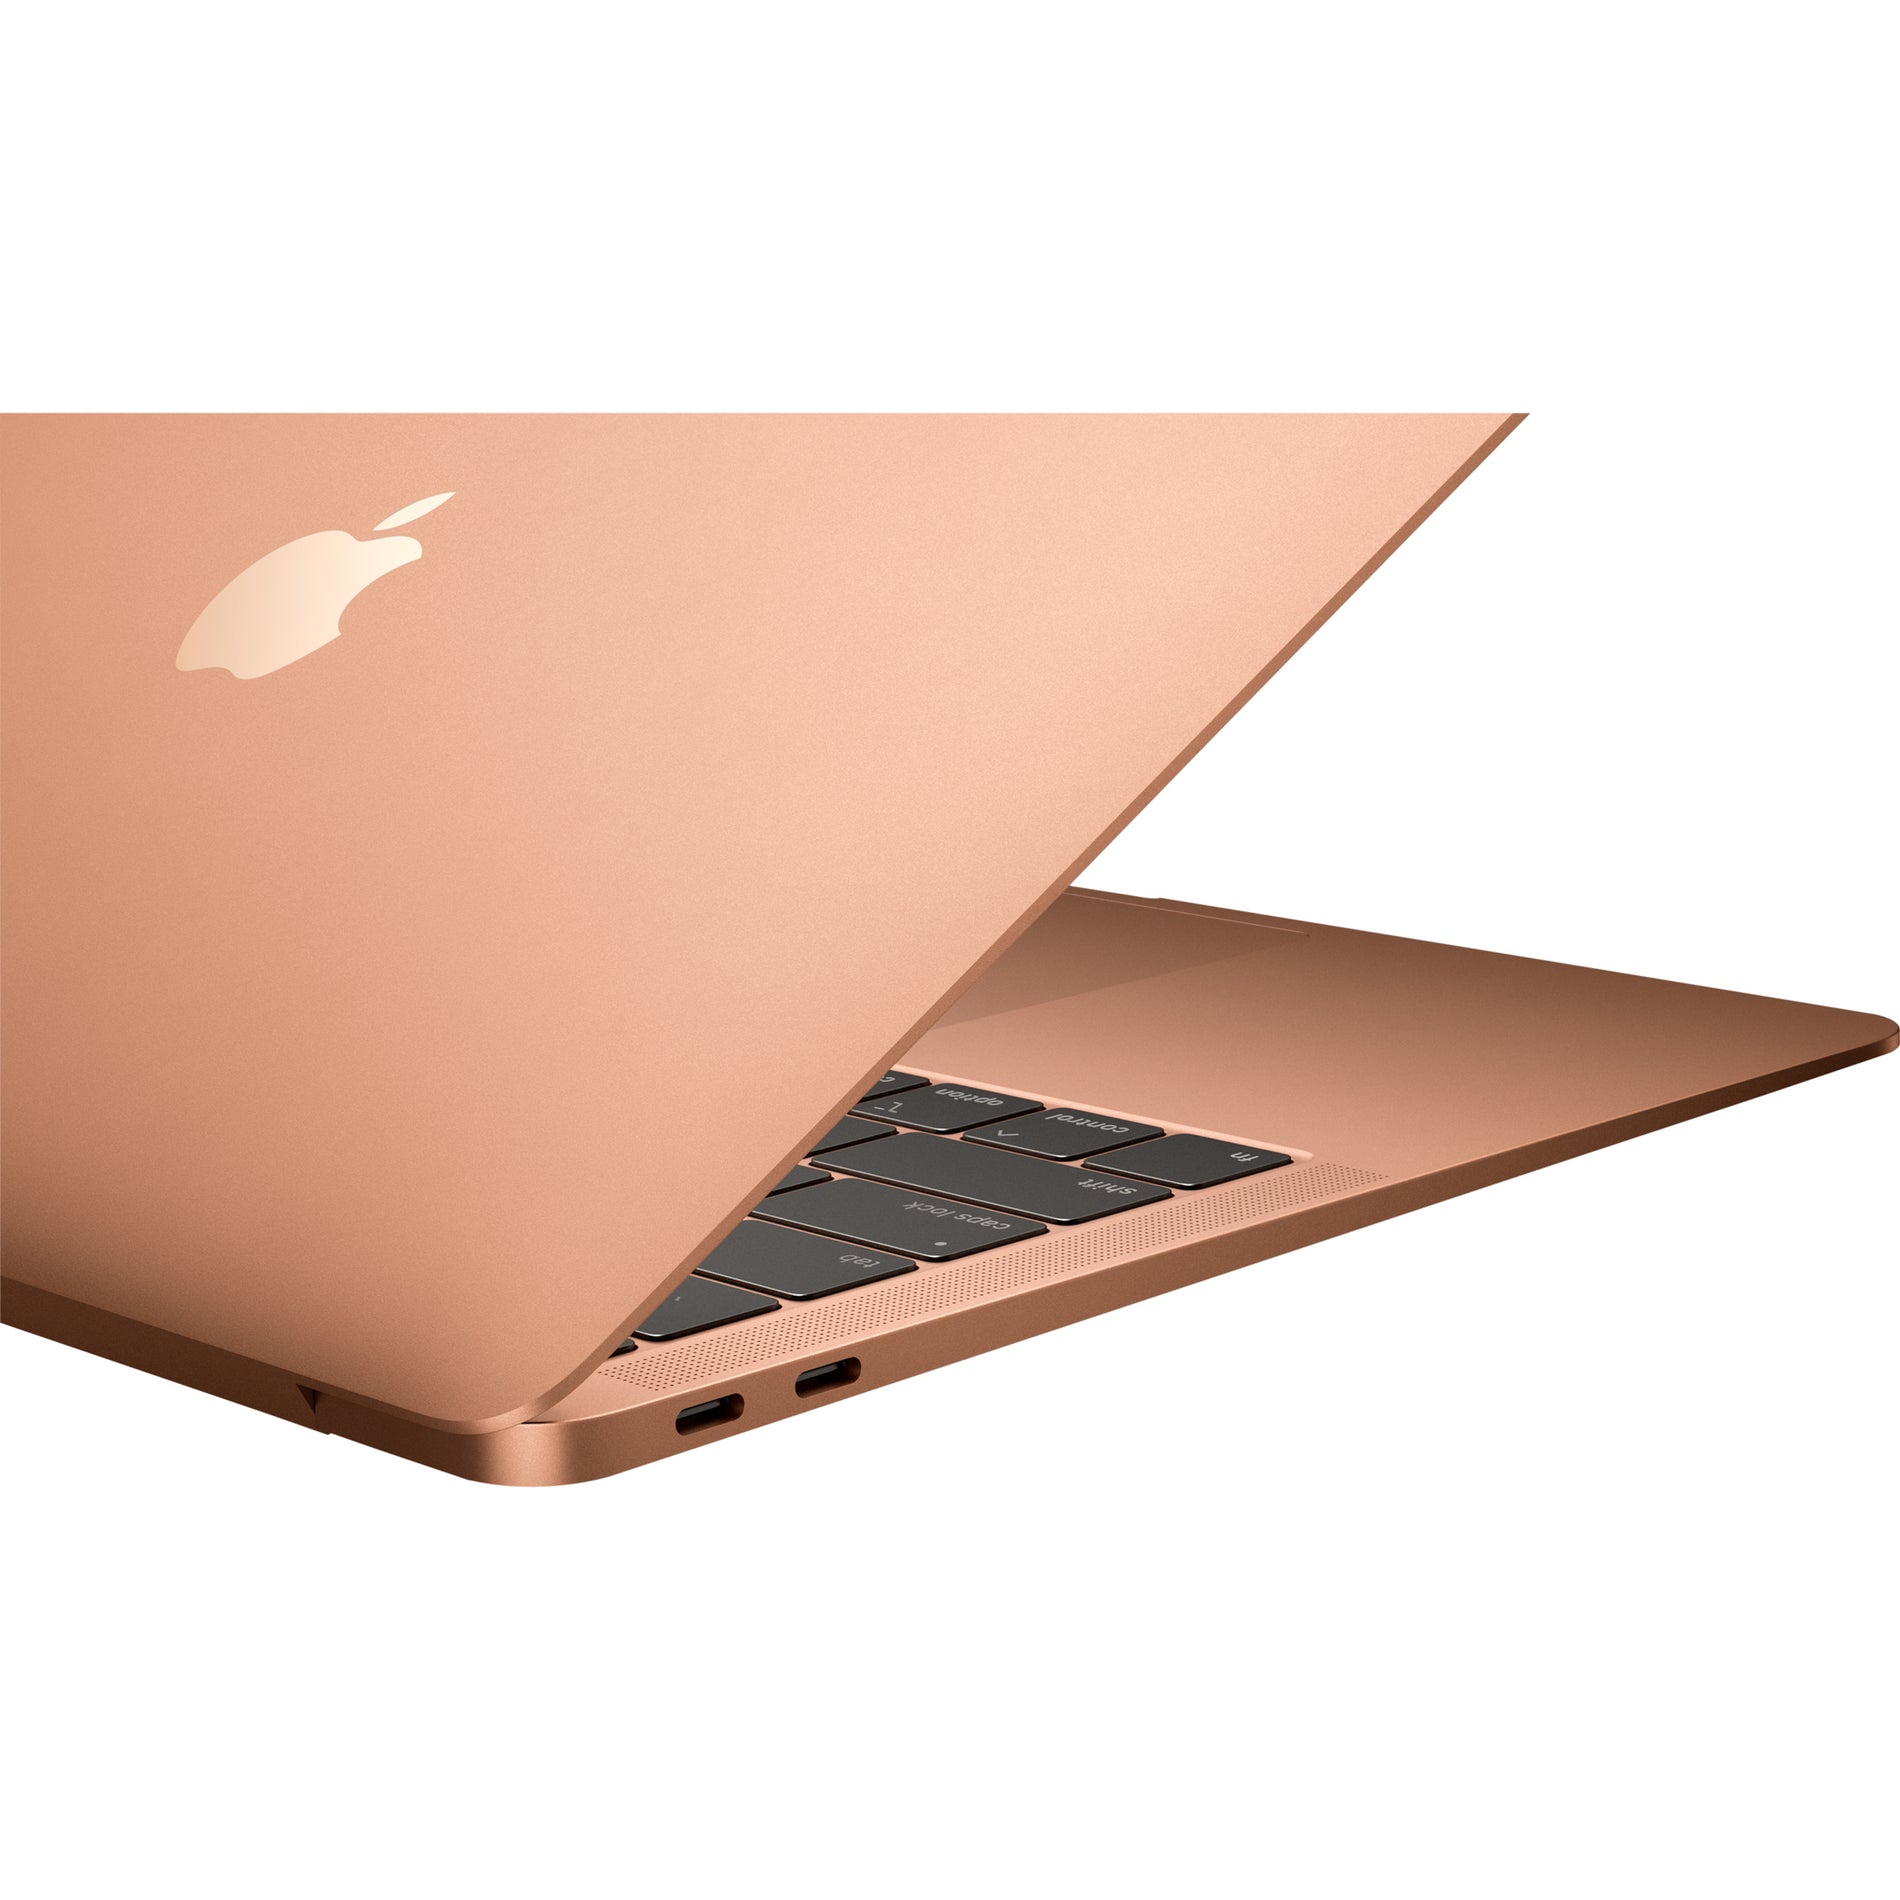 Apple MVFM2LL/A MacBook Air 13.3" Gold, 8GB RAM, 128GB SSD, macOS Mojave